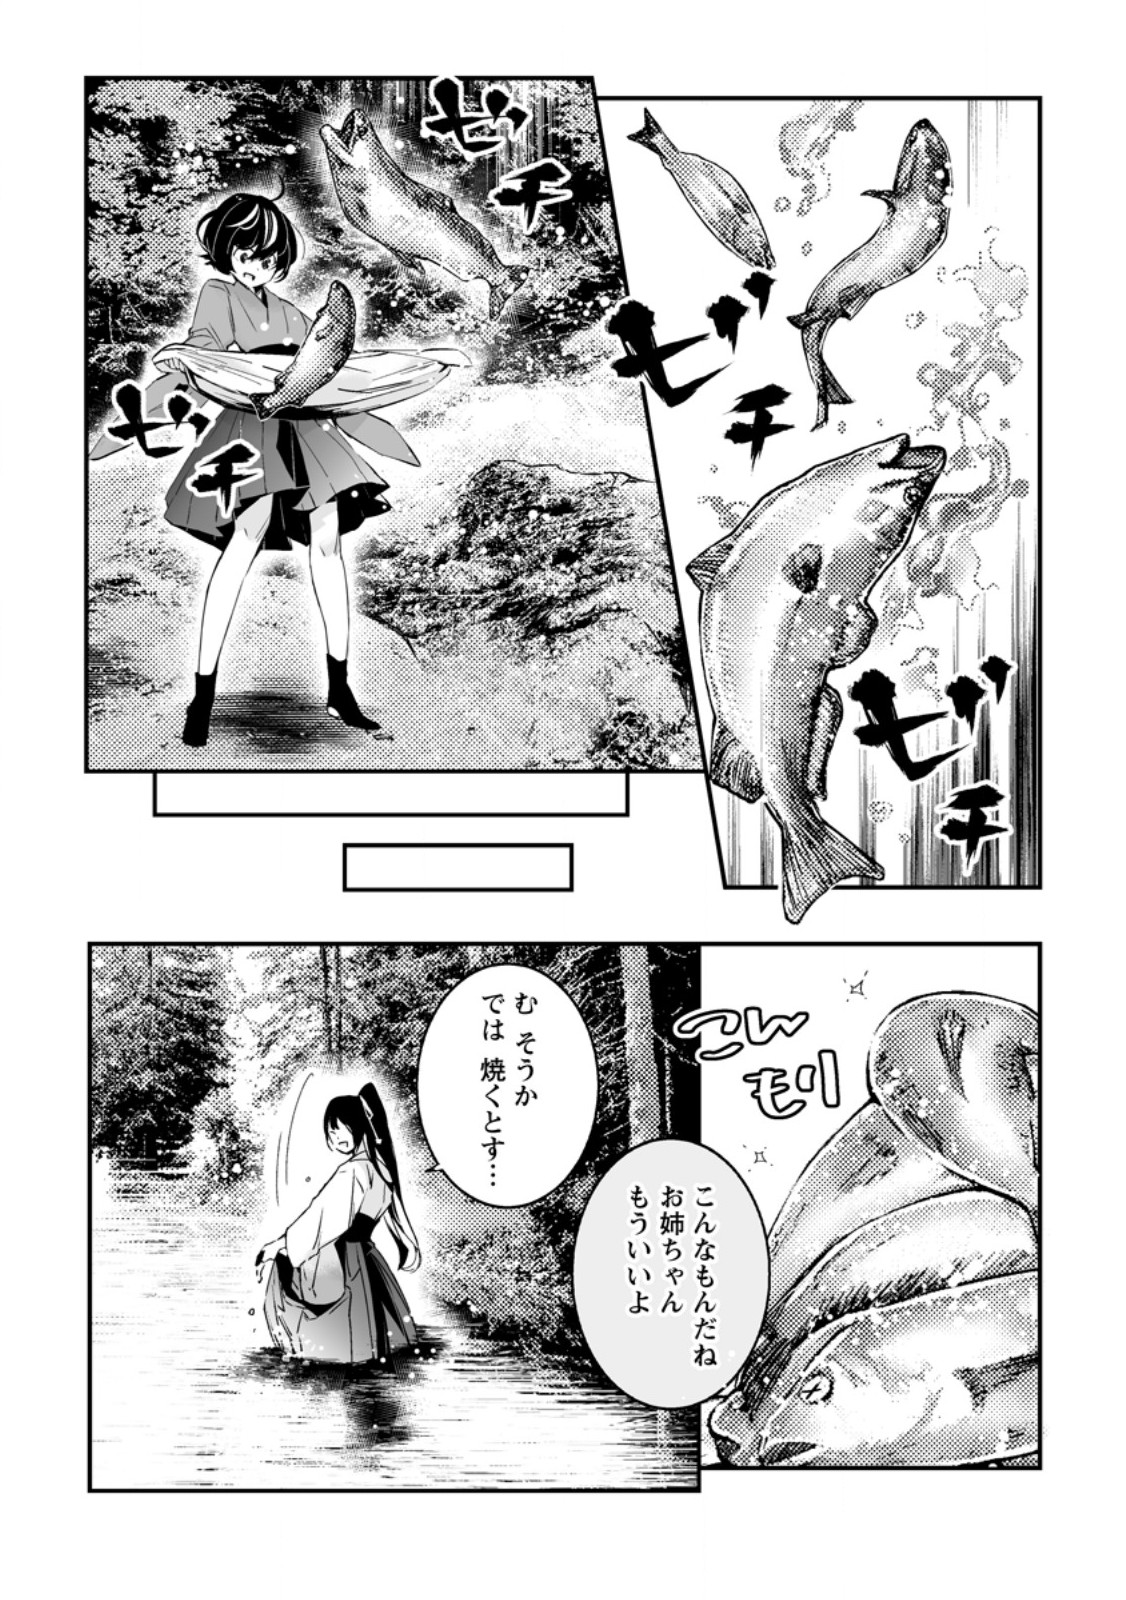 Hakui no Eiyuu - Chapter 30.3 - Page 5